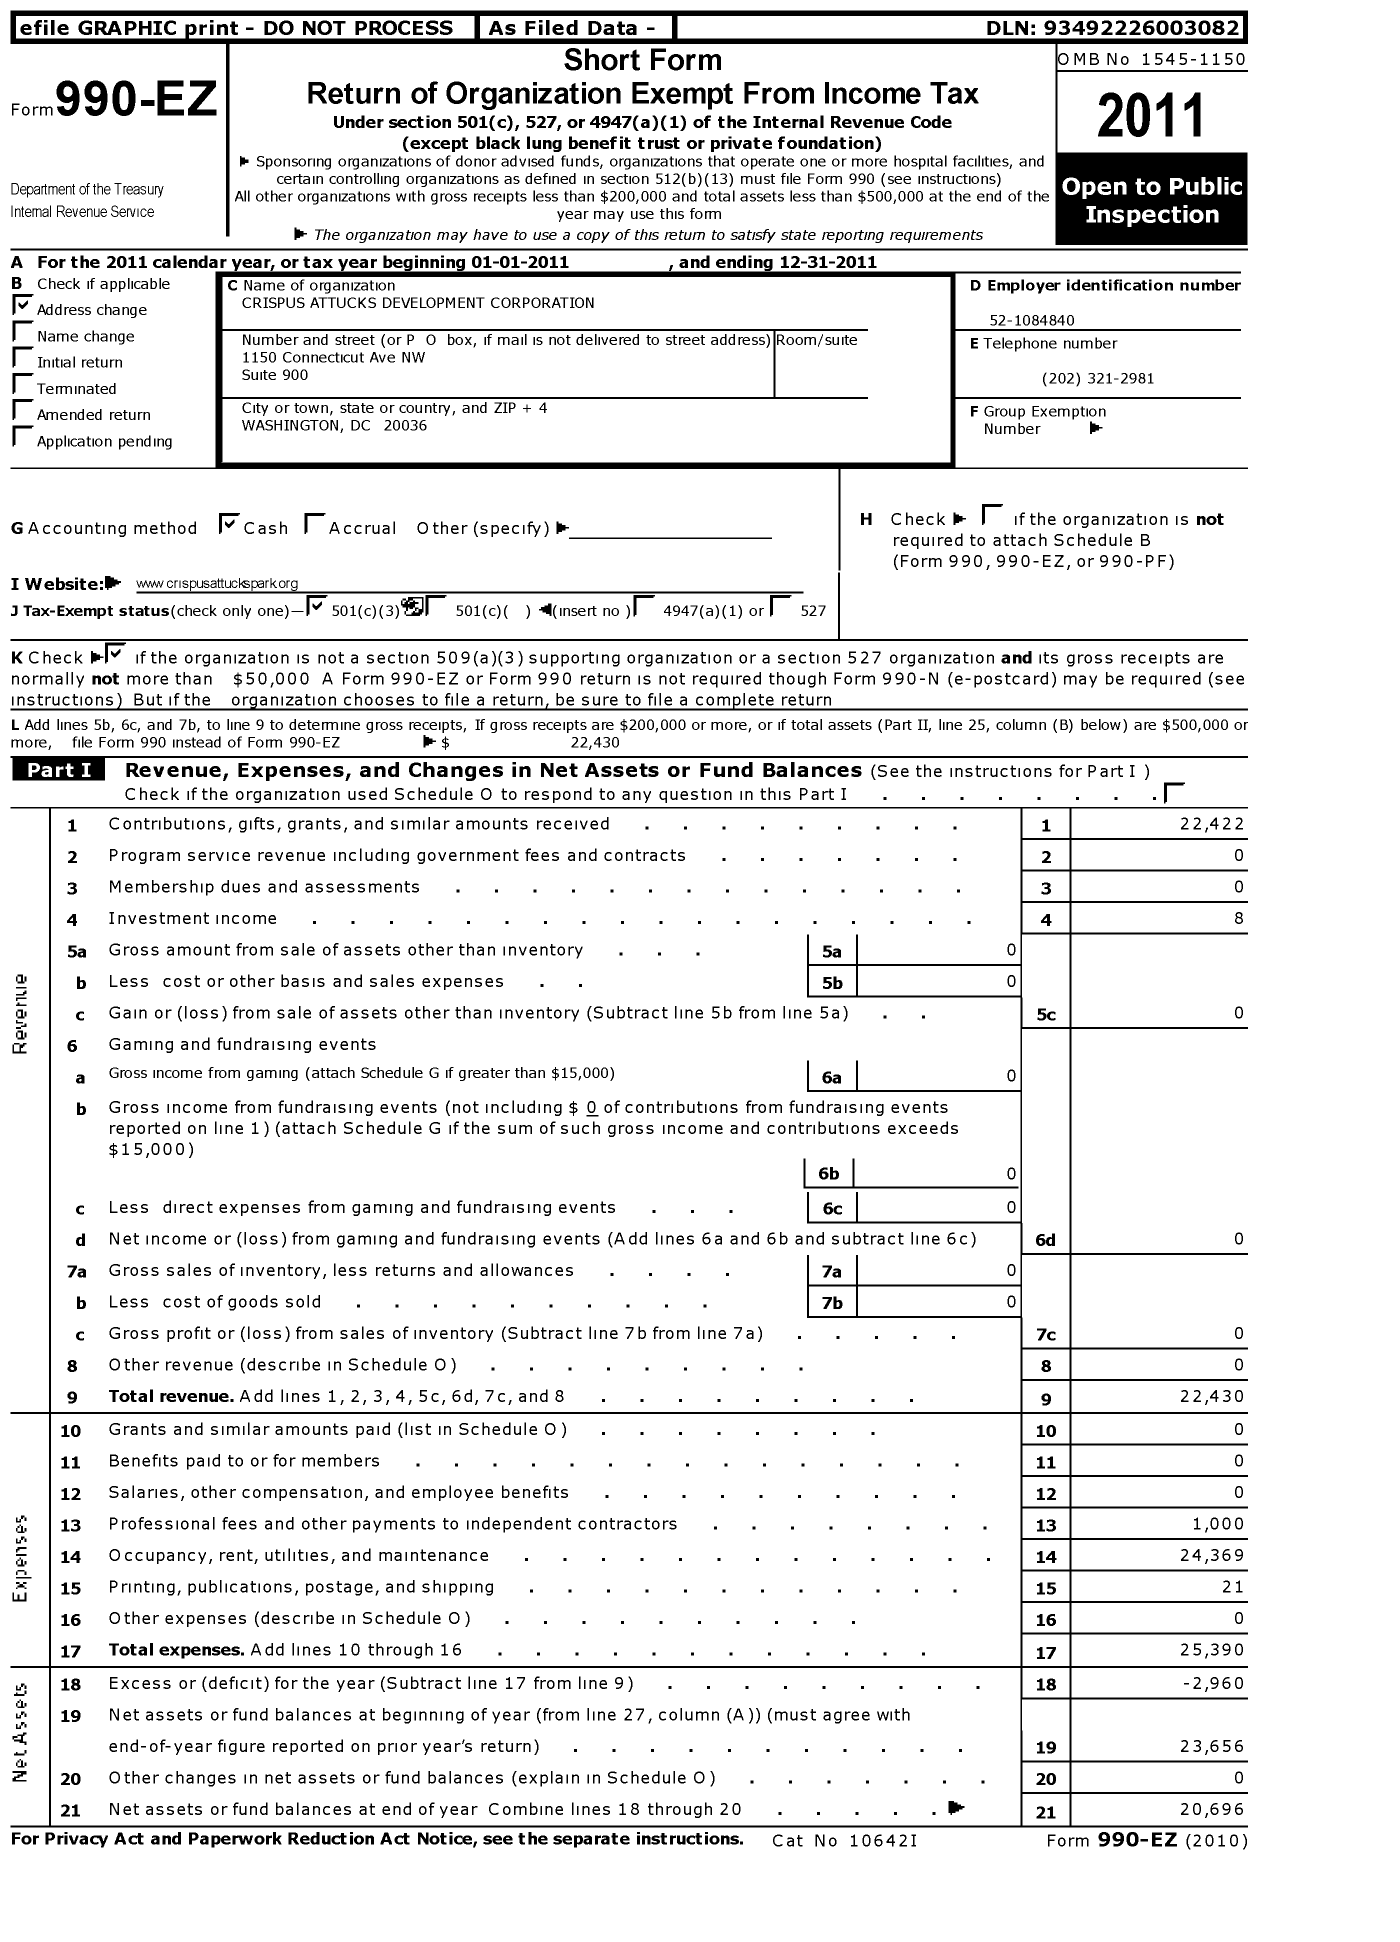 Image of first page of 2011 Form 990EZ for Crispus Attucks Development Corporation